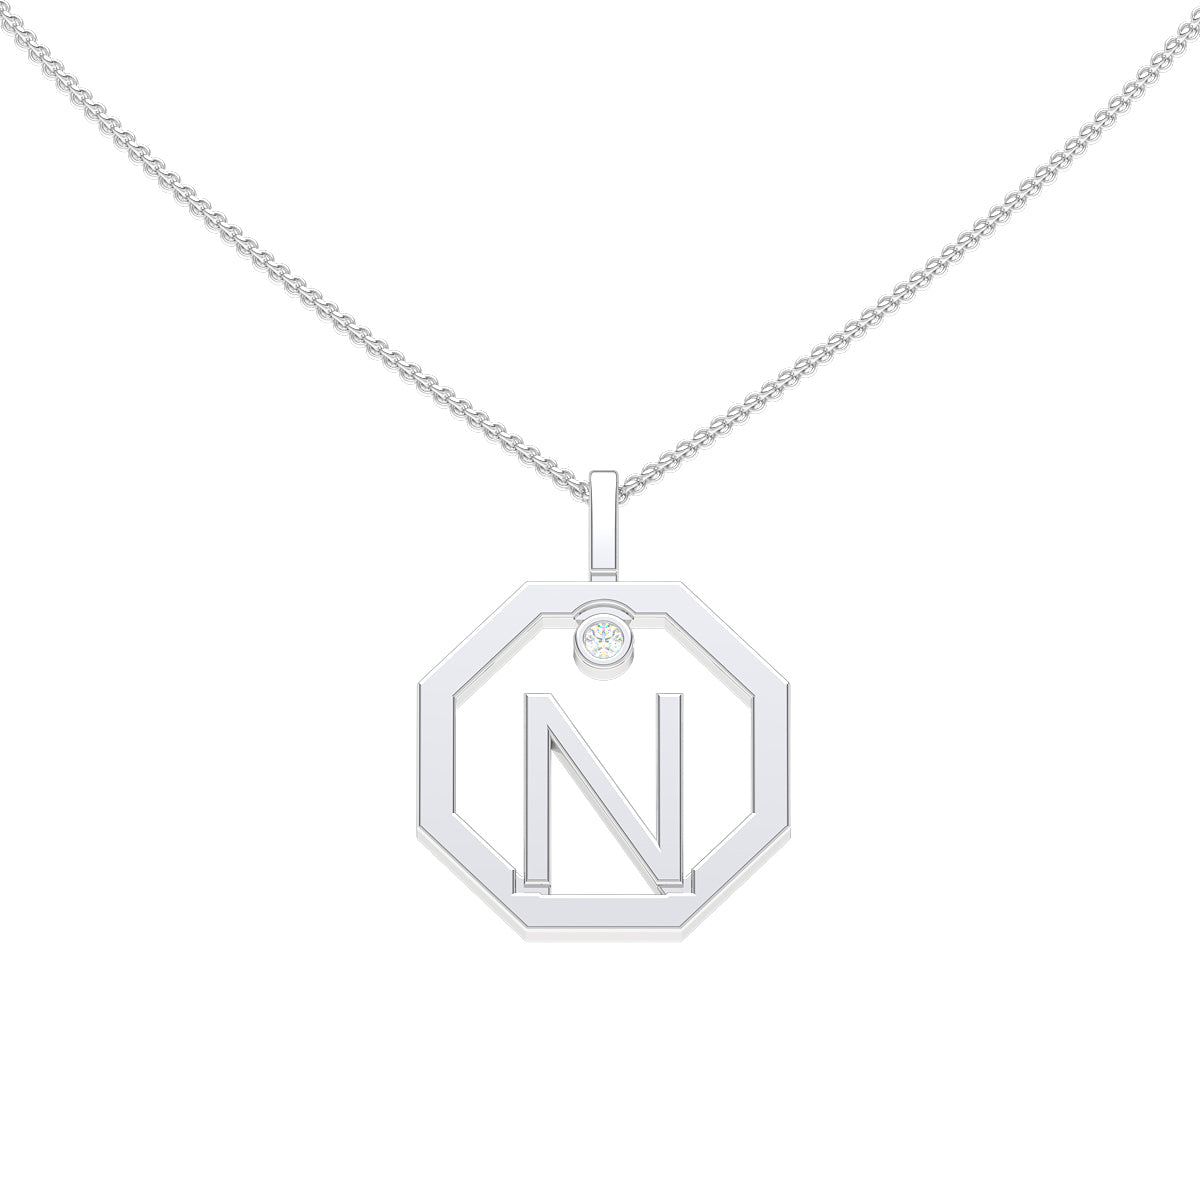 Personalised-Initial-N-diamond-white-gold-pendant-Lizunova-Fine-Jewels-Sydney-NSW-Australia